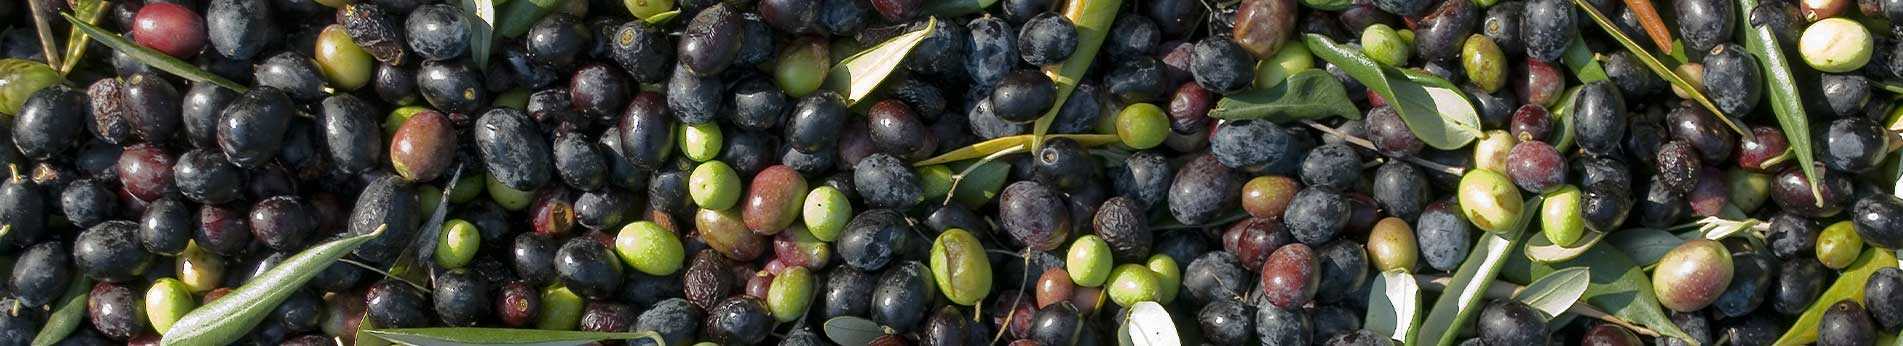 Olive harvesting 